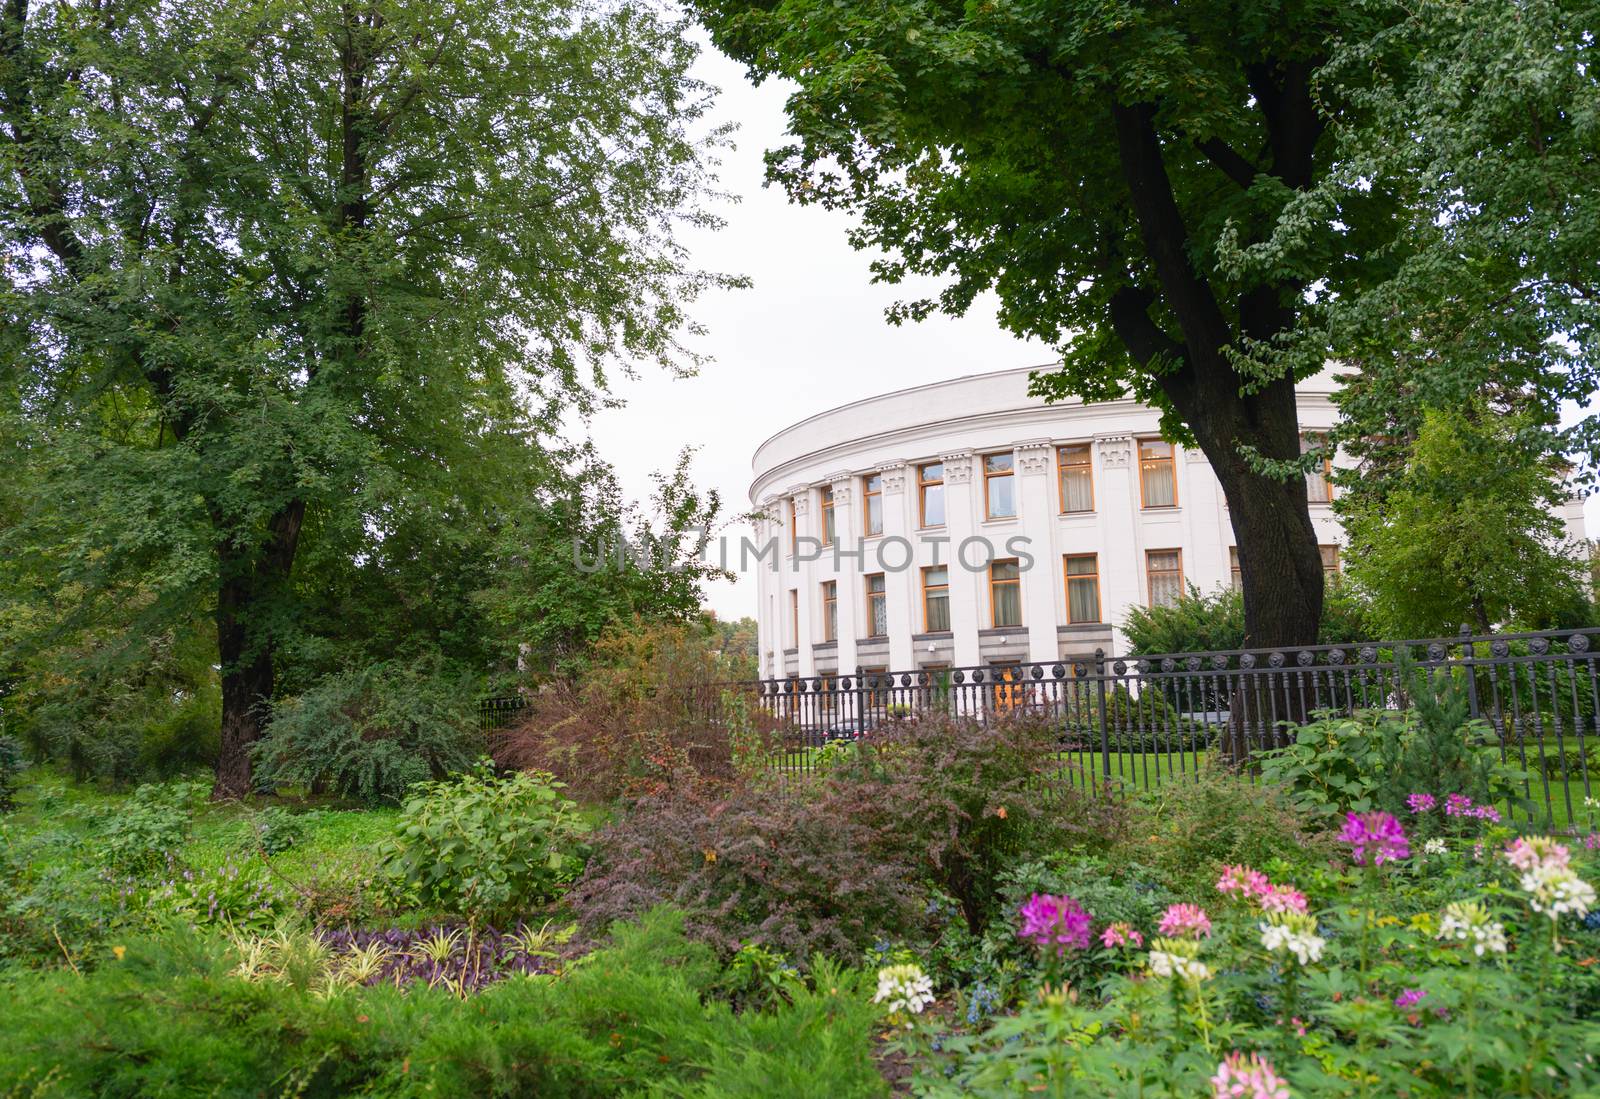 Parliament of Ukraine (Verkhovna Rada) in Kiev, Ukraine view from green plants and flowers in park.